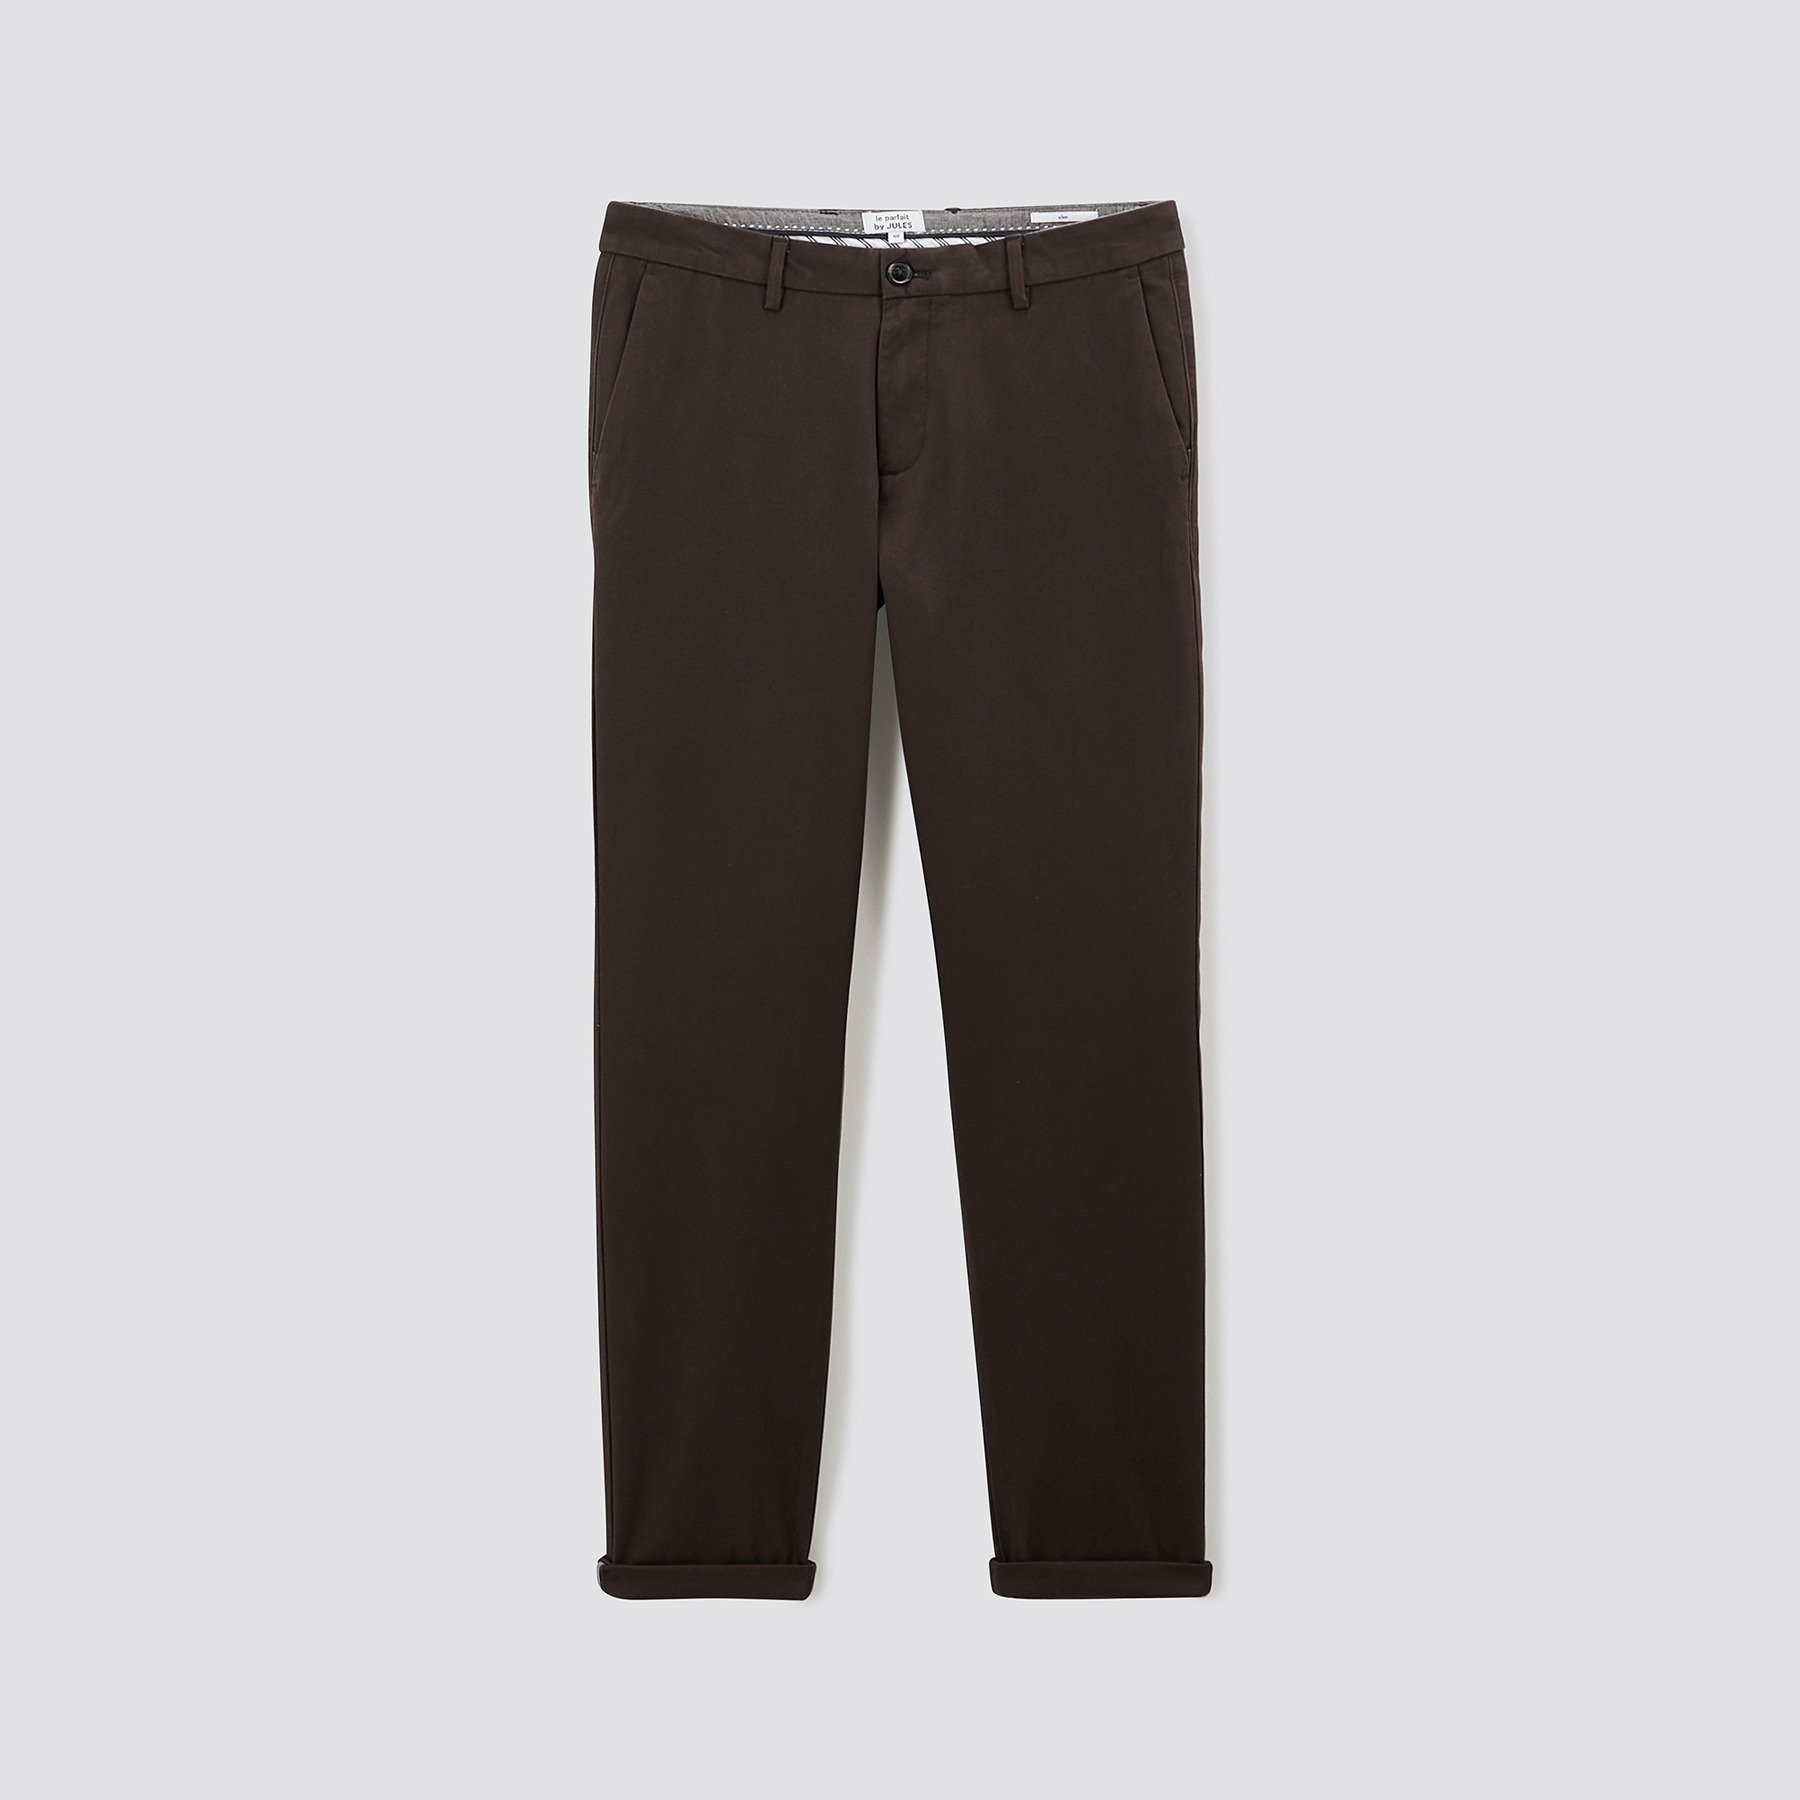 Pantalon chino slim urbain "le parfait by JULES" Marron 36 98% Coton, 2% Elasthanne Homme